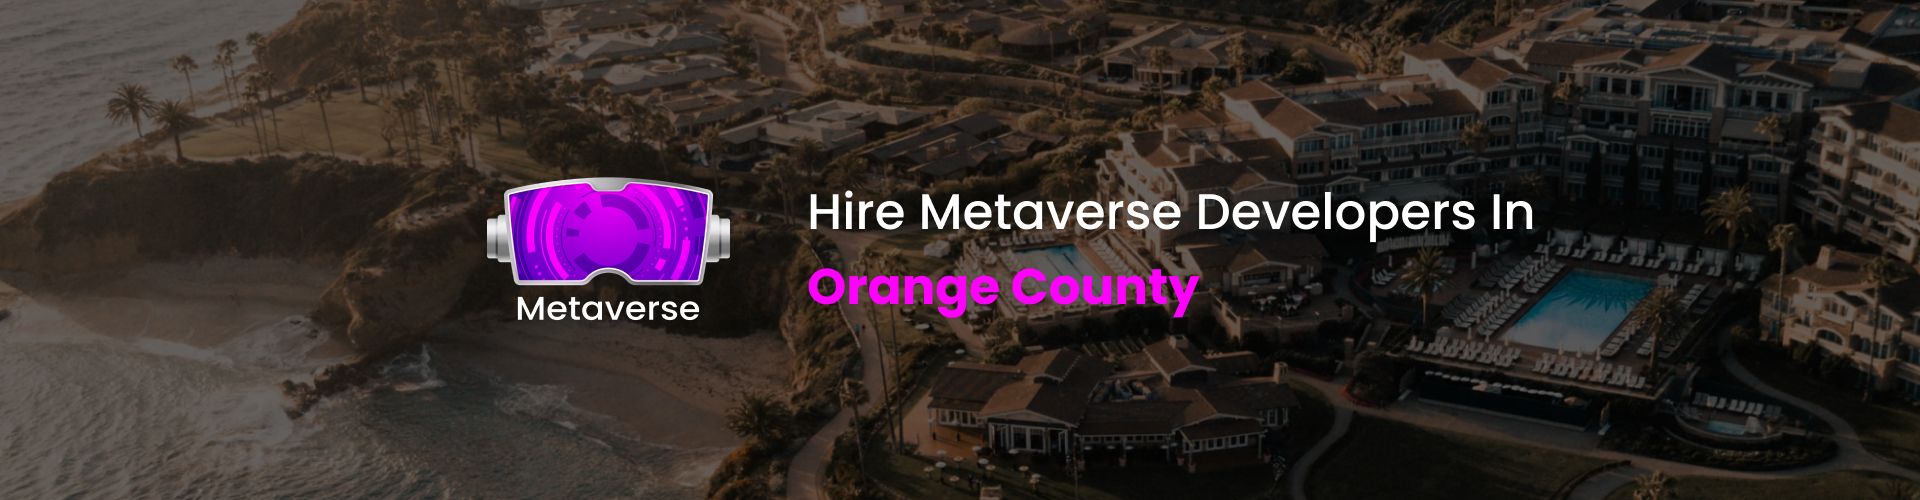  hire metaverse developers in orange county